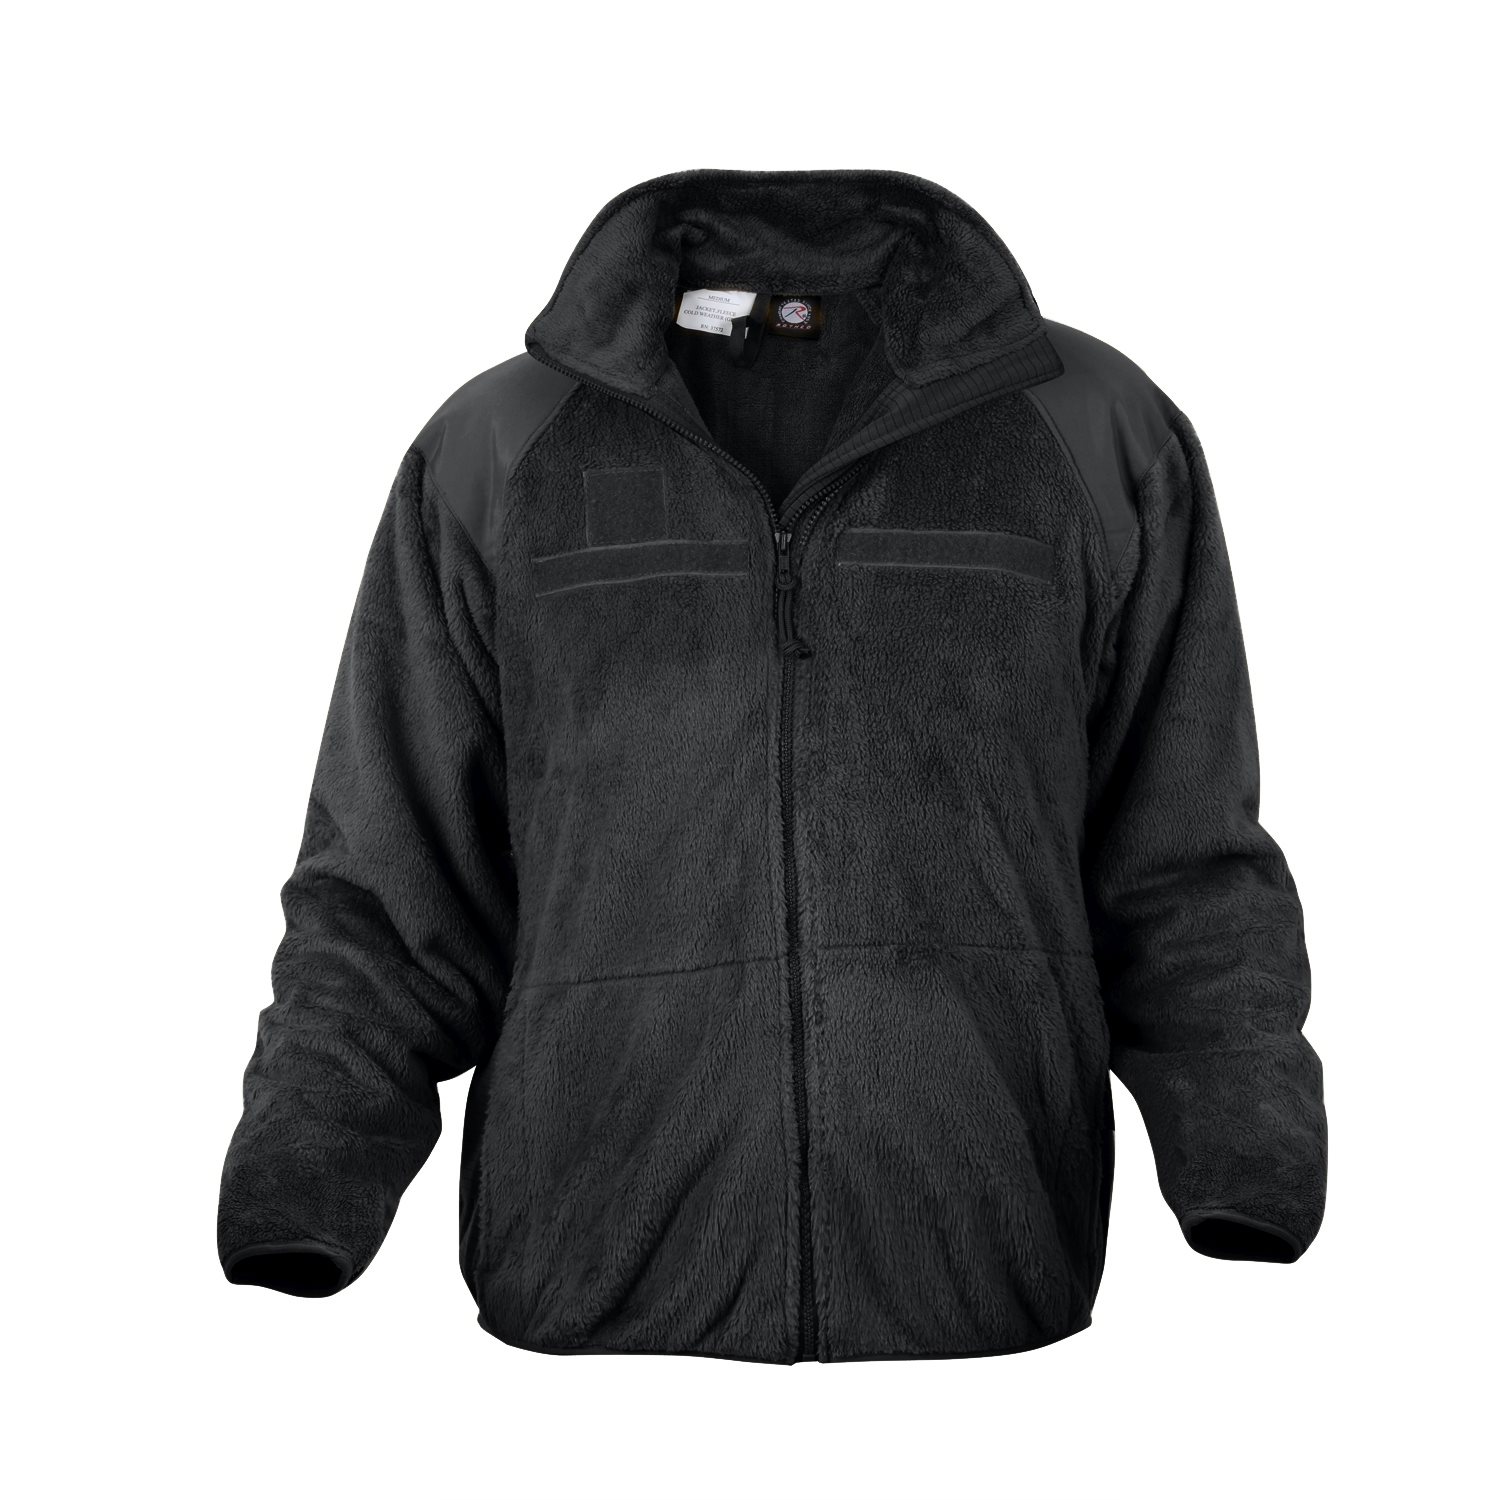 Fleece jacket GEN III / LEVEL 3 ECWCS BLACK ROTHCO 9739 L-11